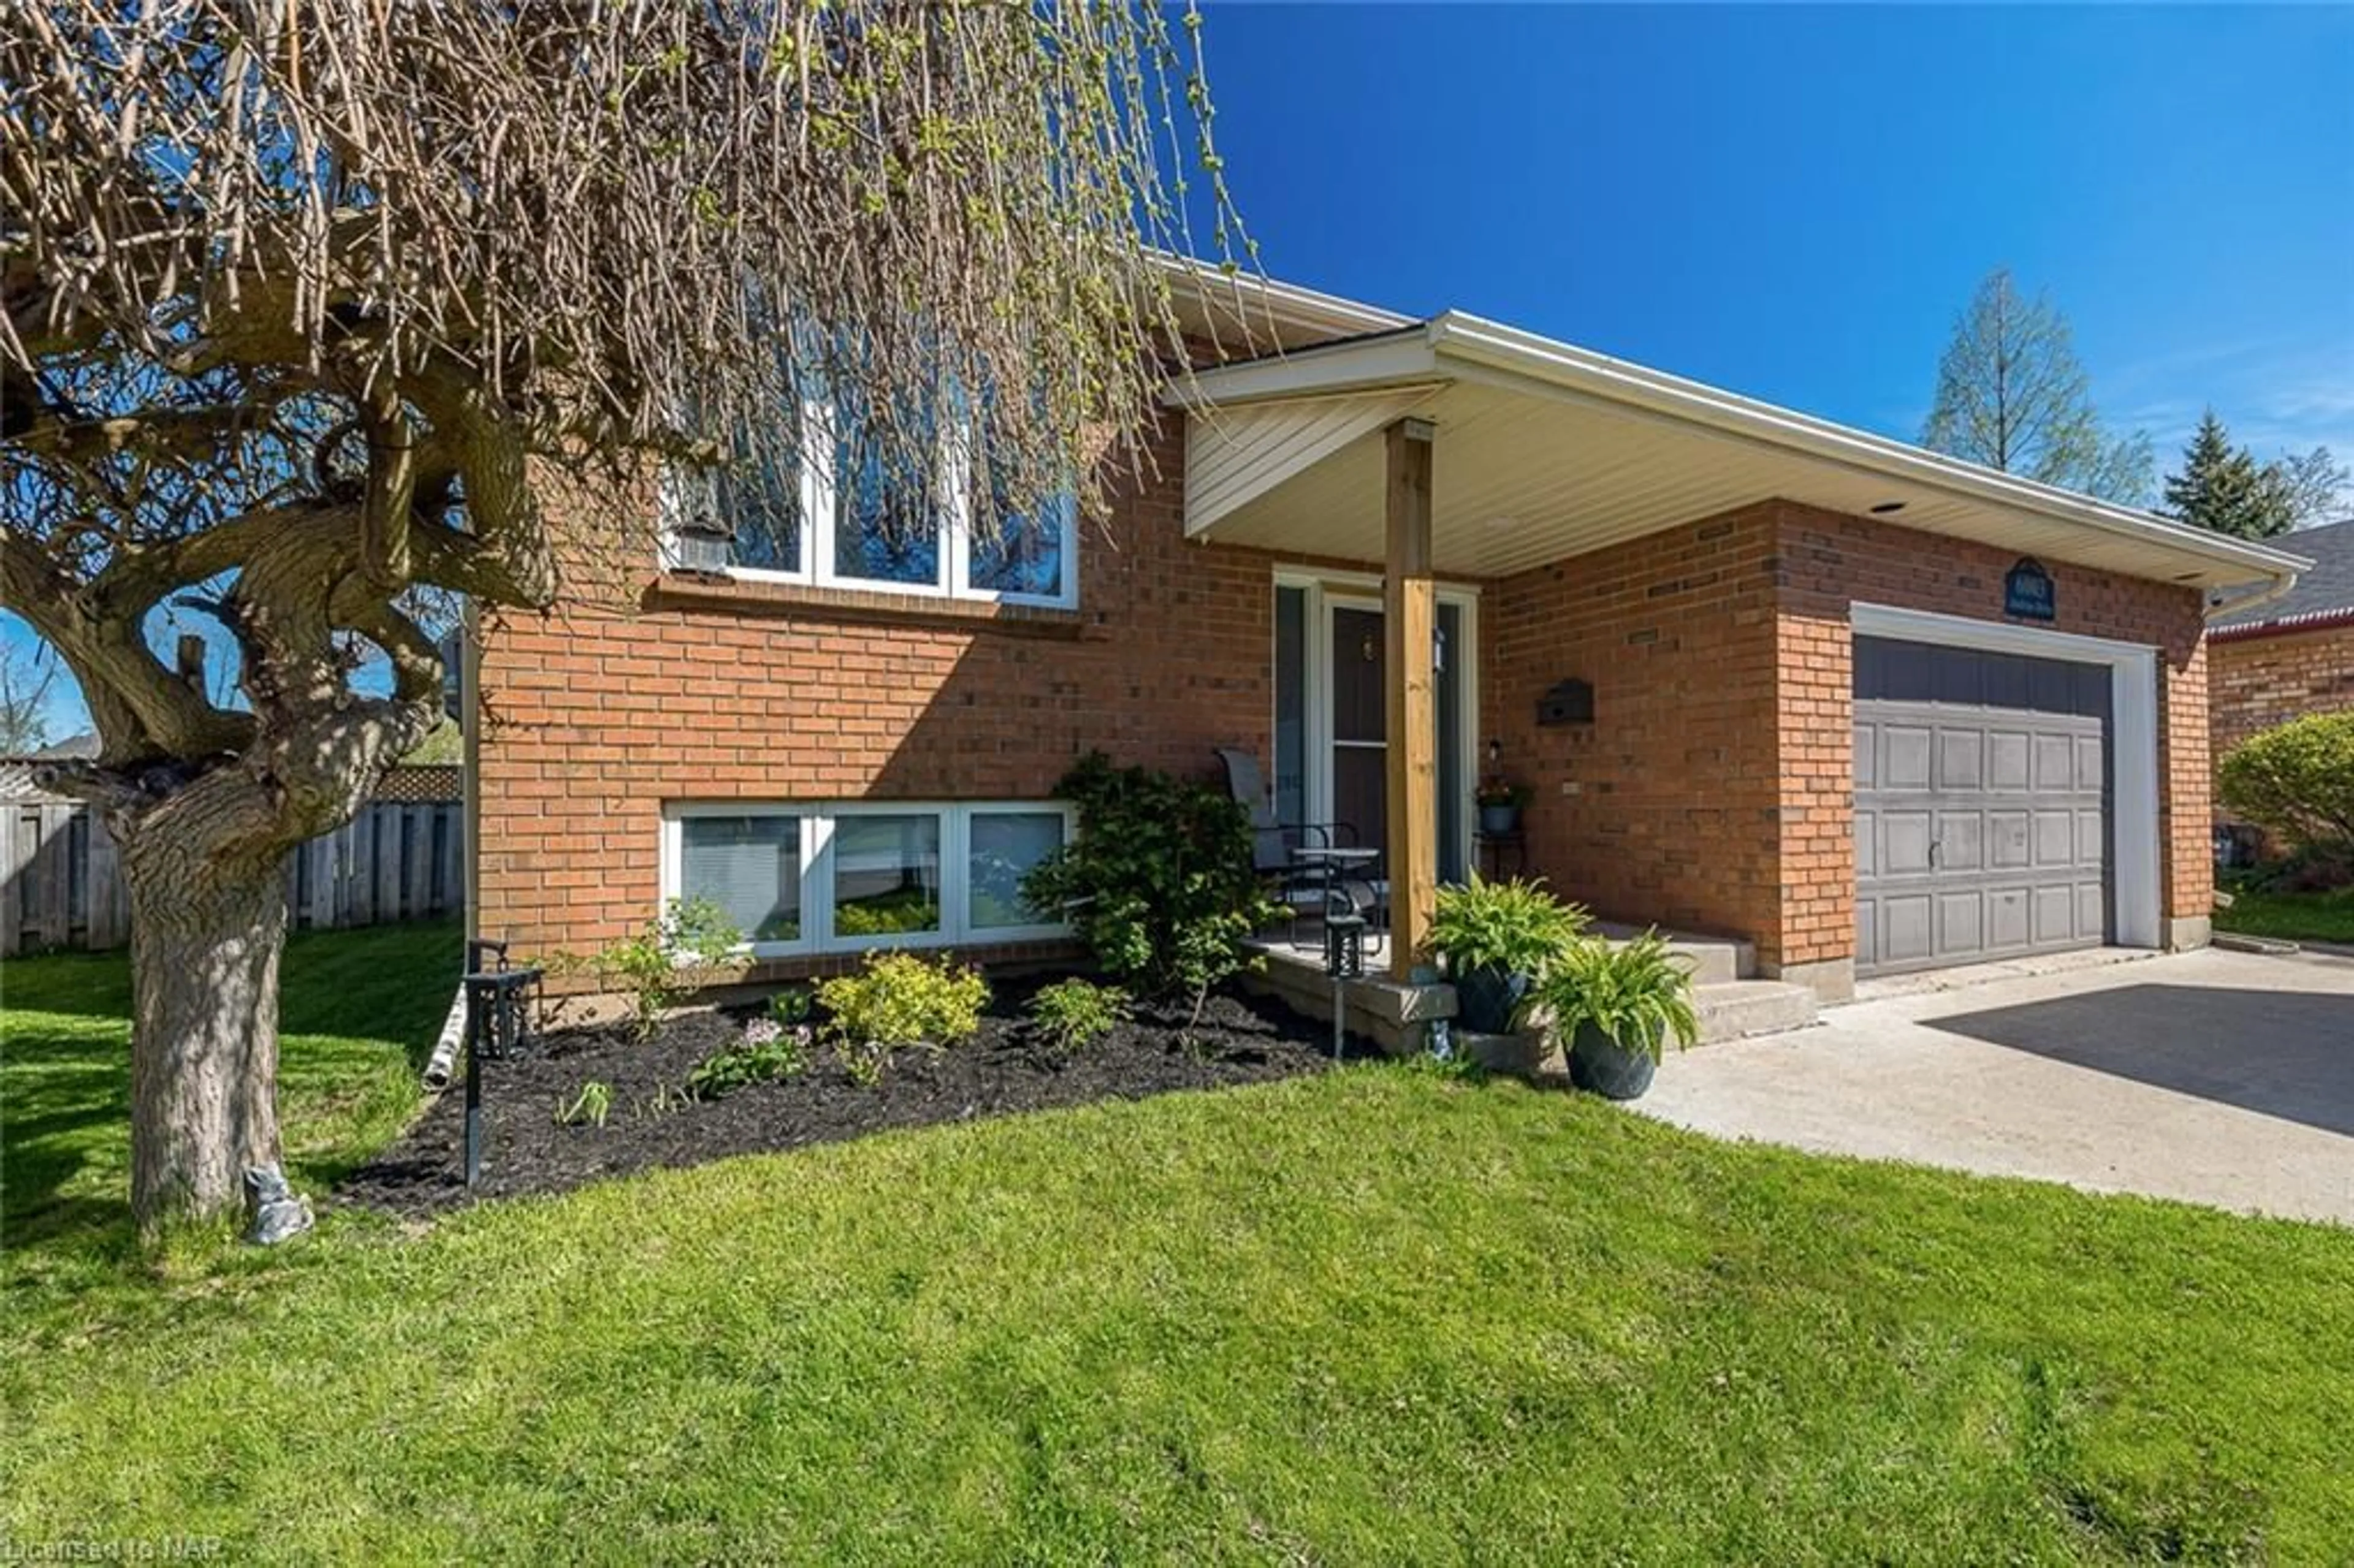 Home with brick exterior material for 6003 Andrea Dr, Niagara Falls Ontario L2H 2Z9